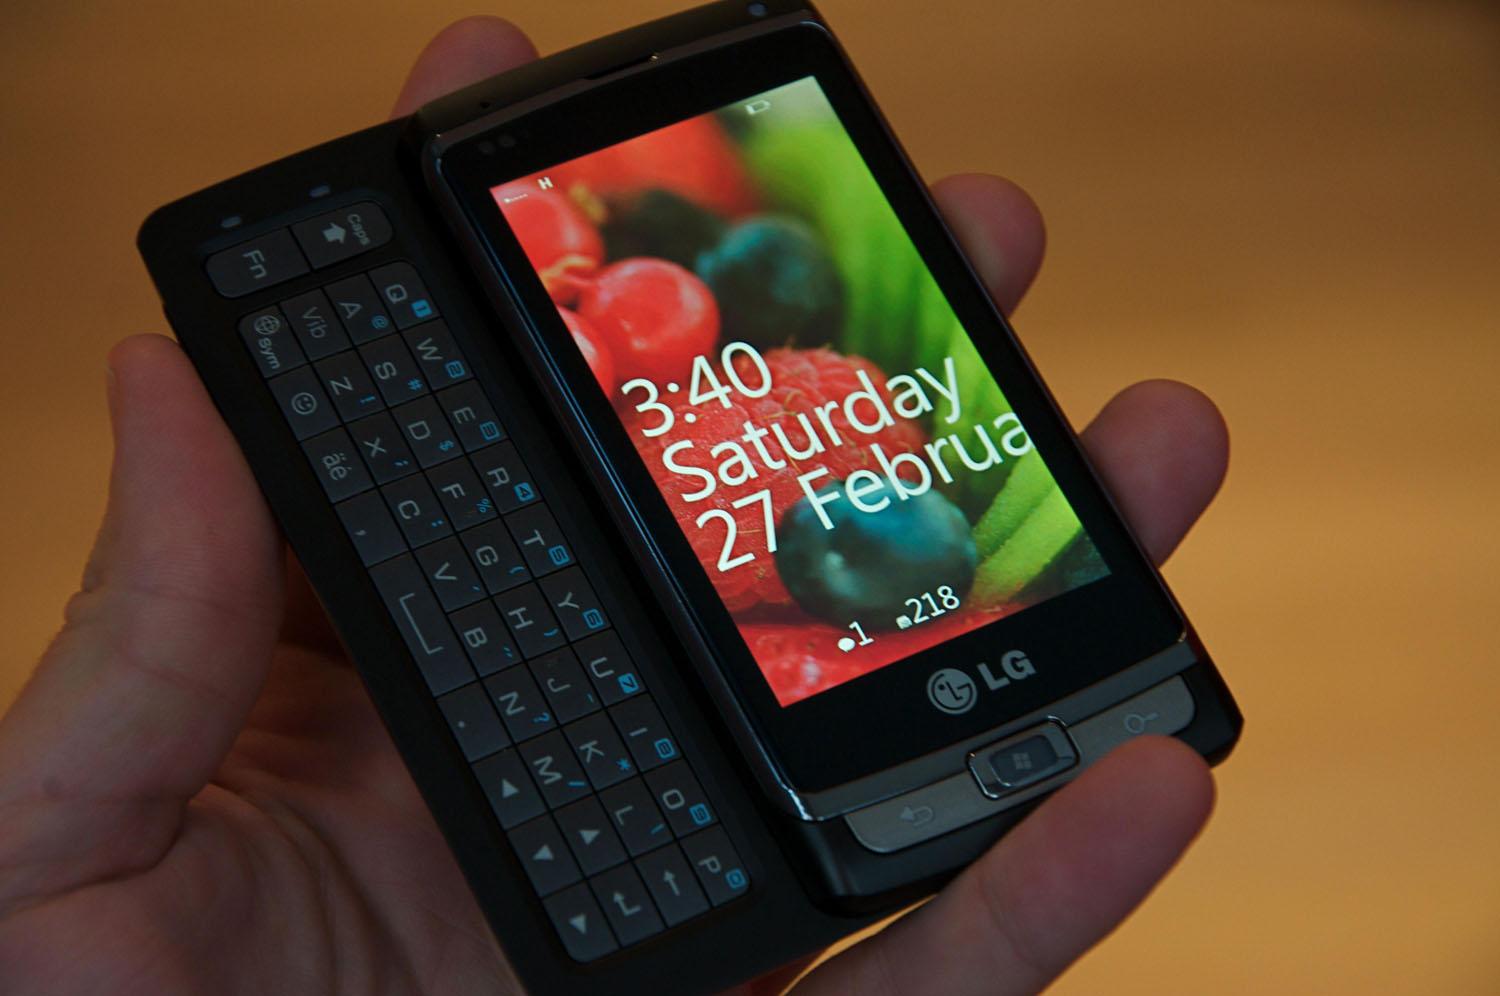 LG Windows Phone 7 2